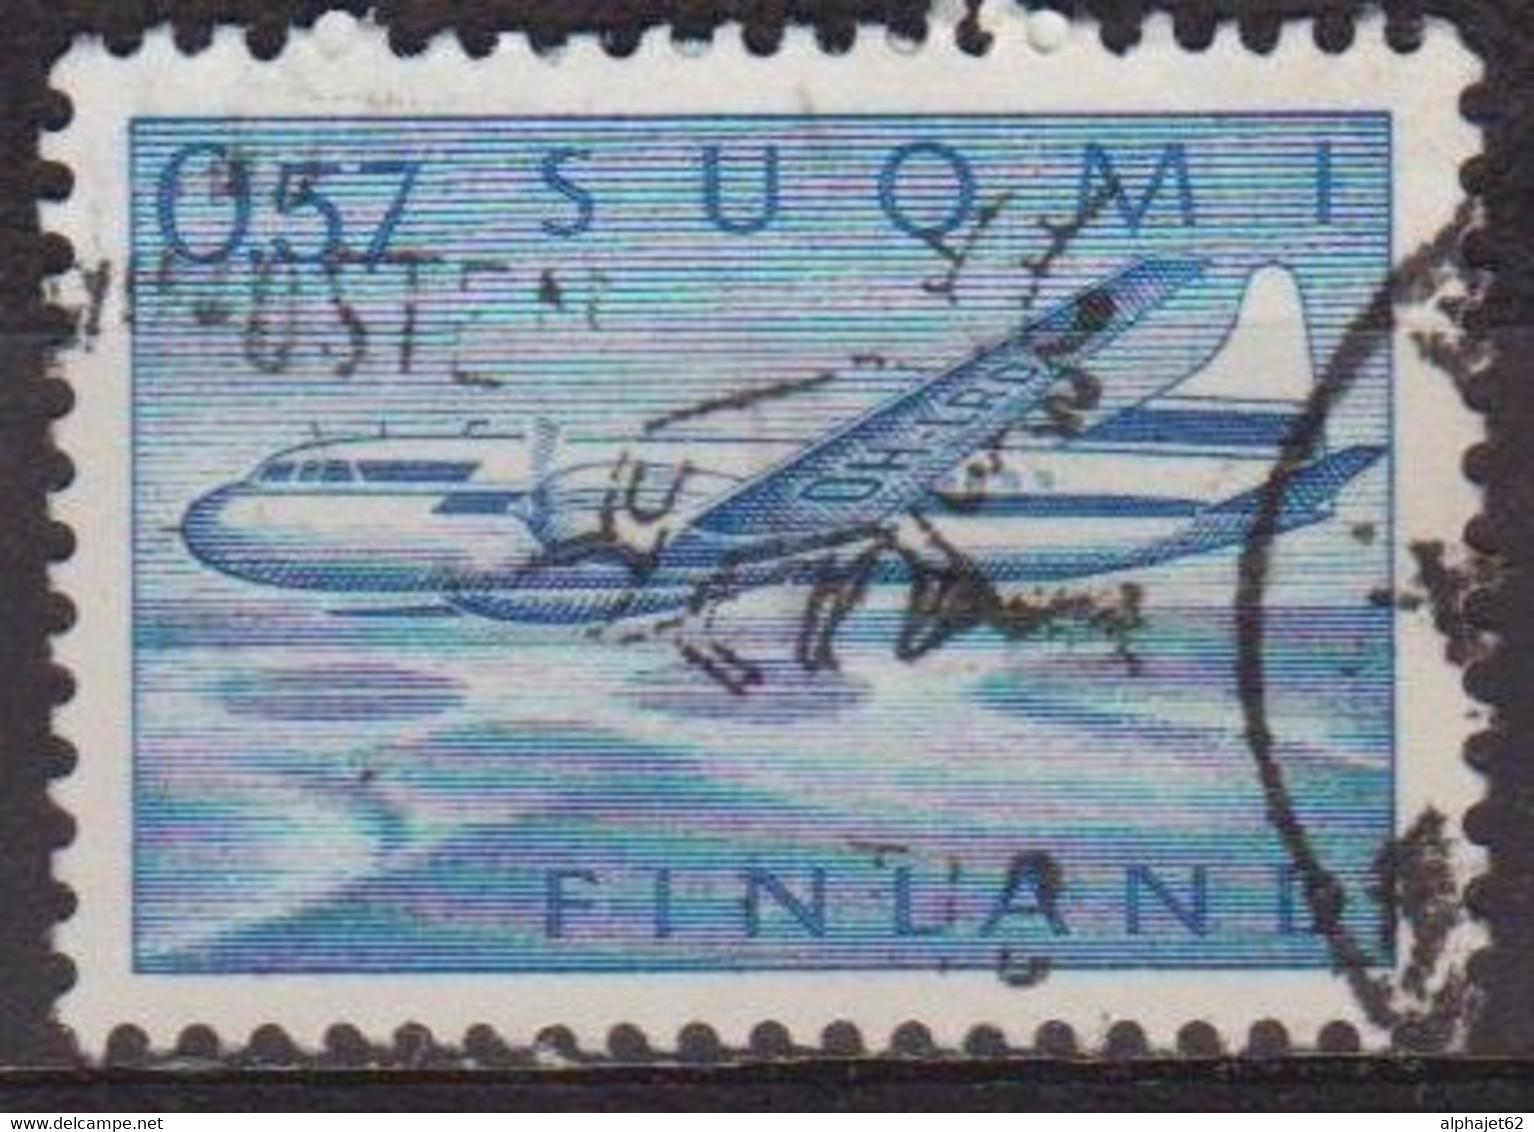 Convair 440, Bimoteur - FINLANDE - Avion De Ligne - Aviation - N° 12 - 1970 - Gebruikt